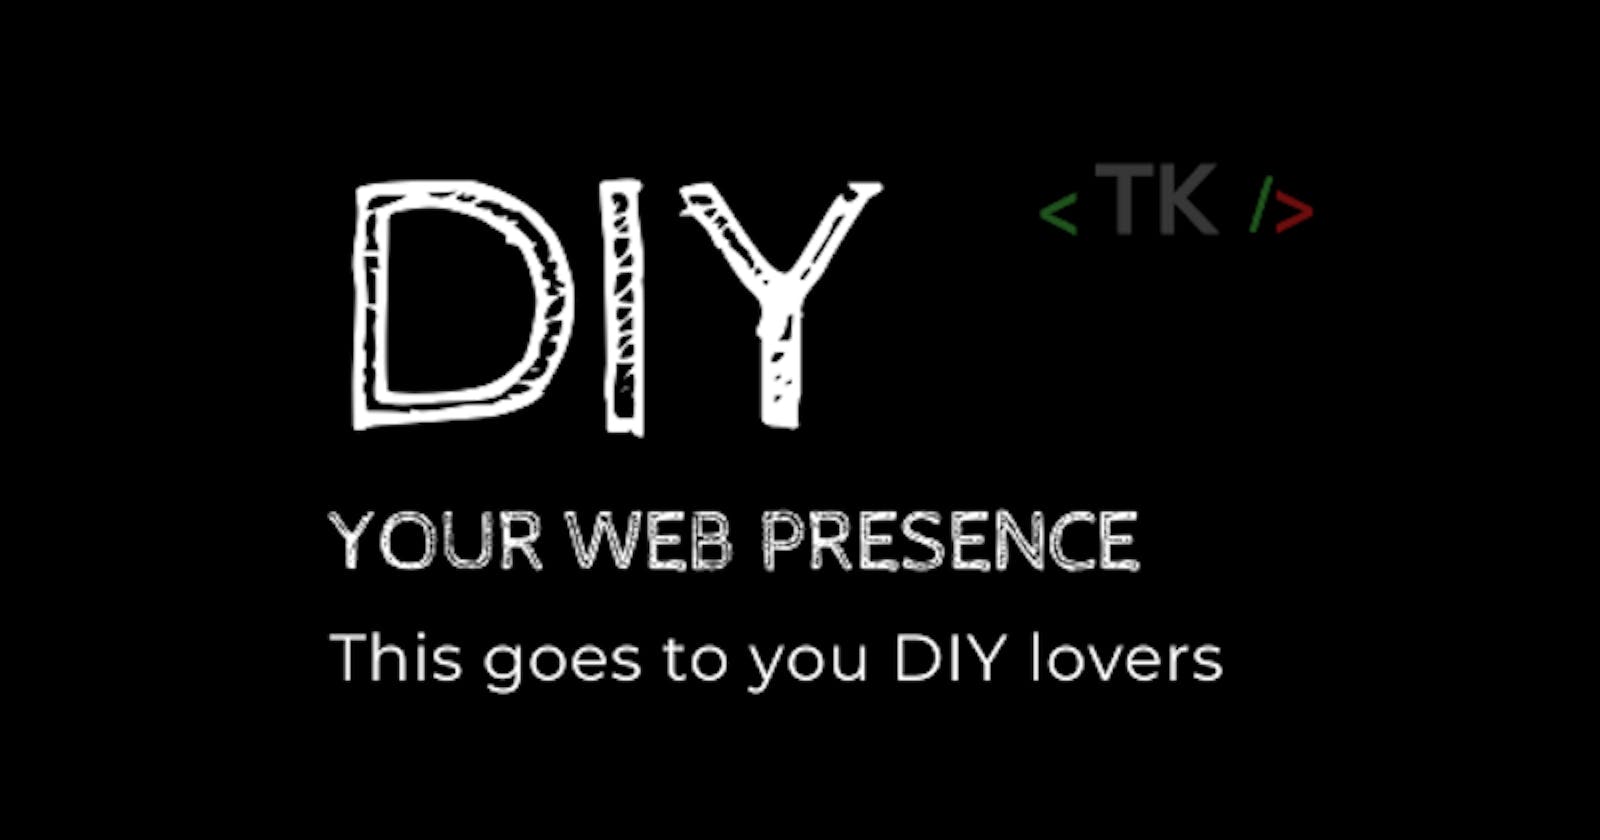 1. #DIY your web presence (Start here)